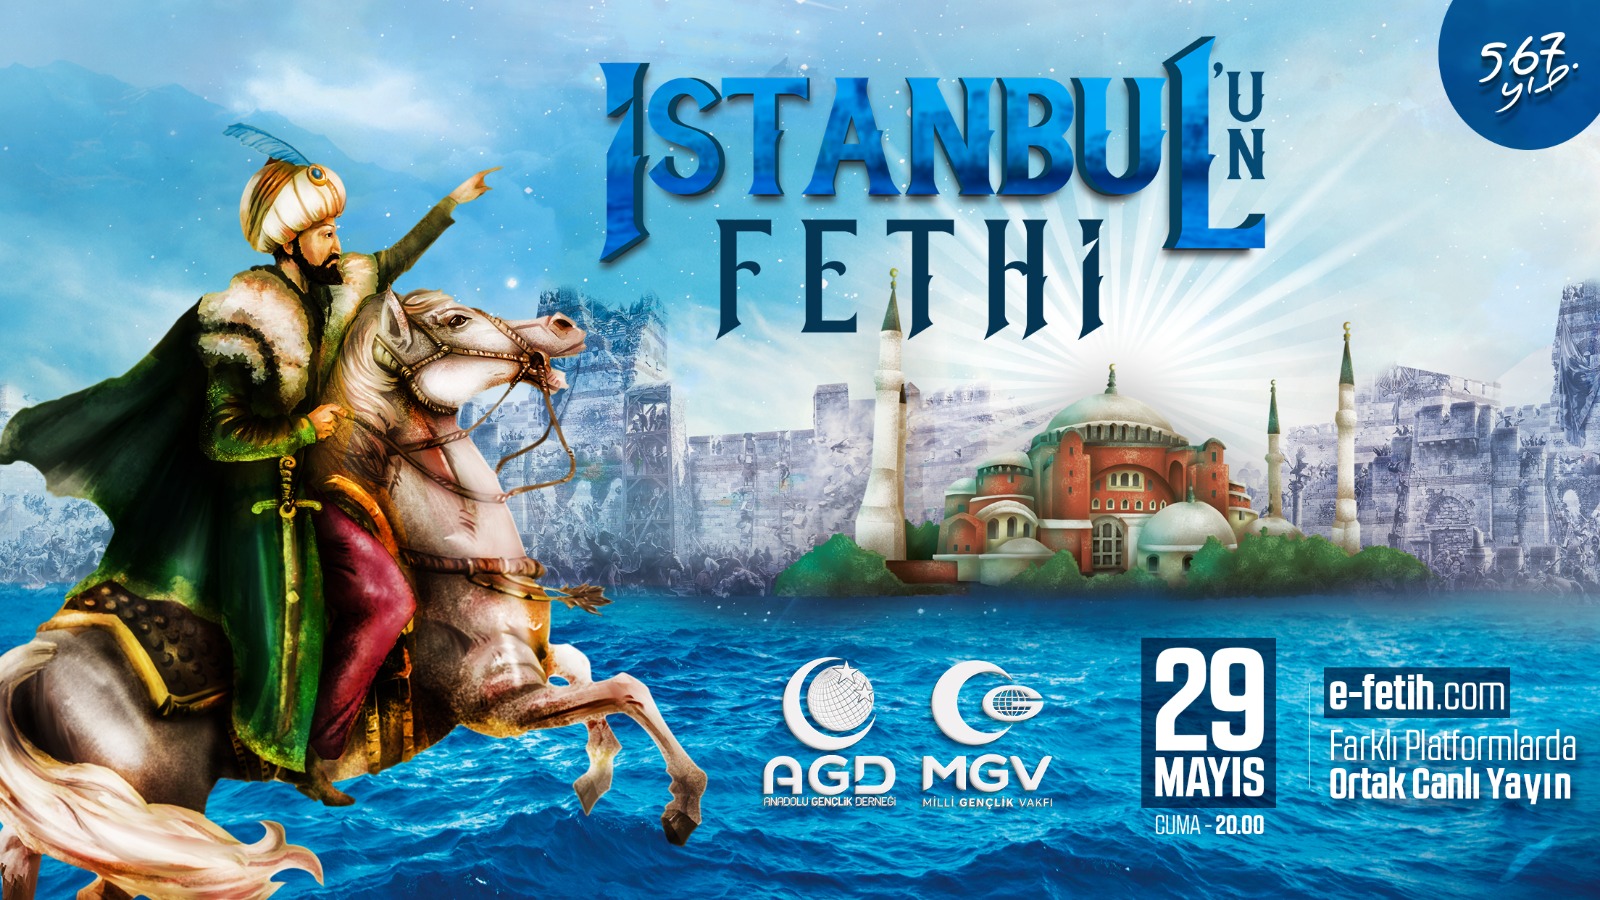 İstanbul’un fethi e-Fetih’le kutlanacak